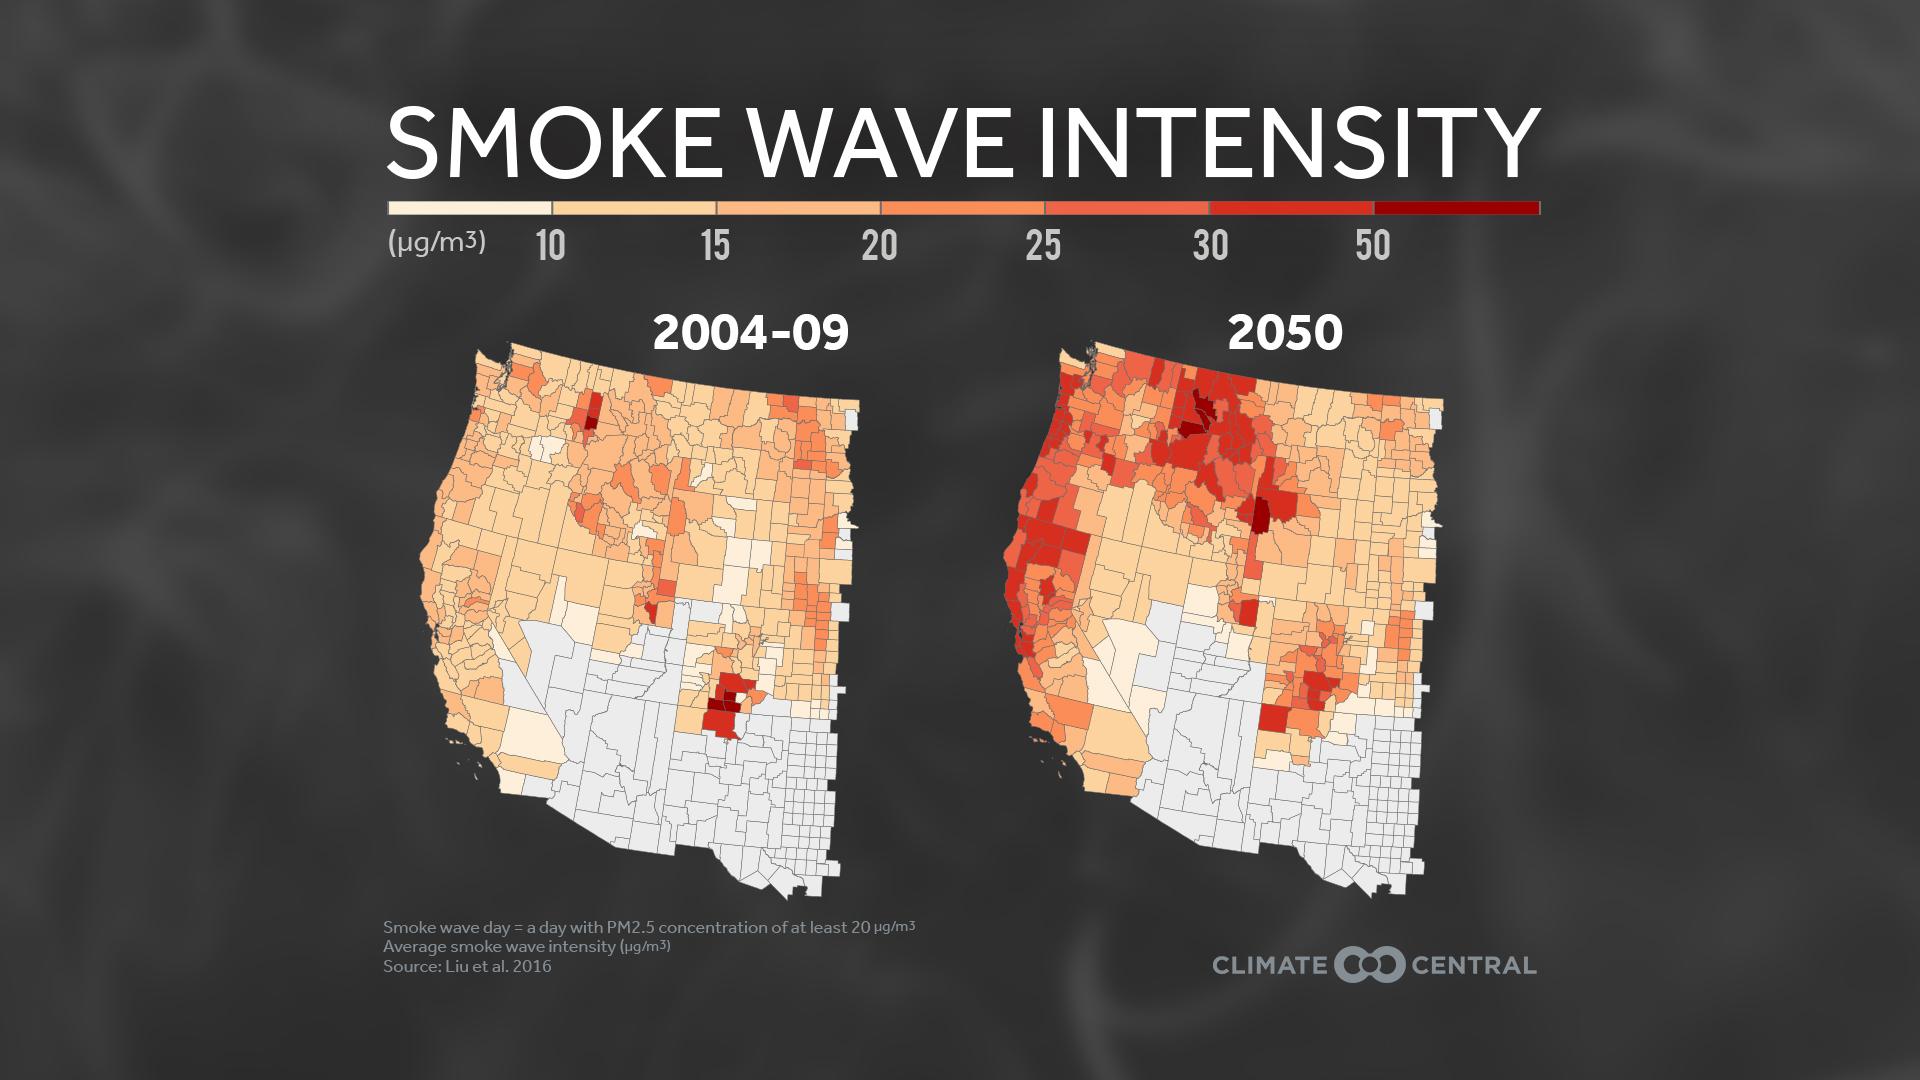 Western Wildfires - 2020 Smoke Waves